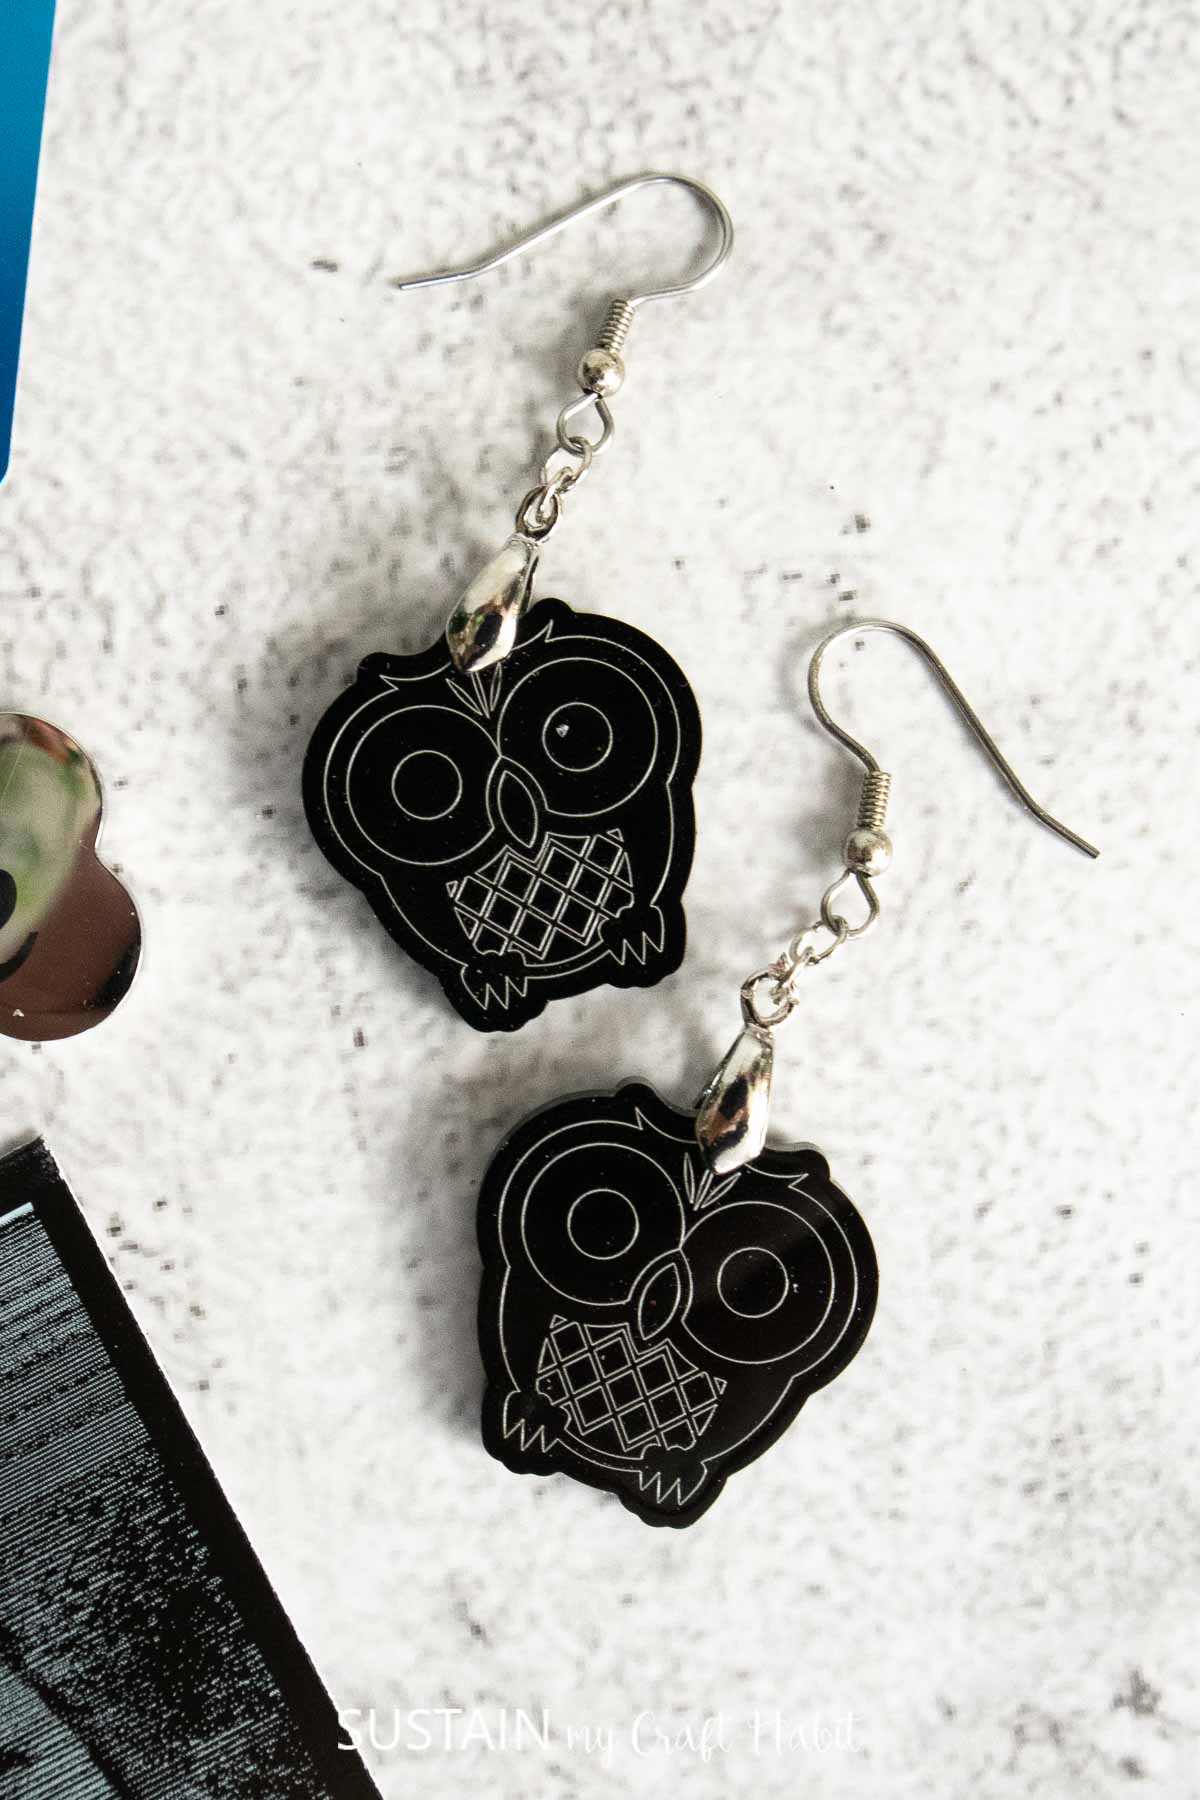 Engraved acrylic owl earrings.